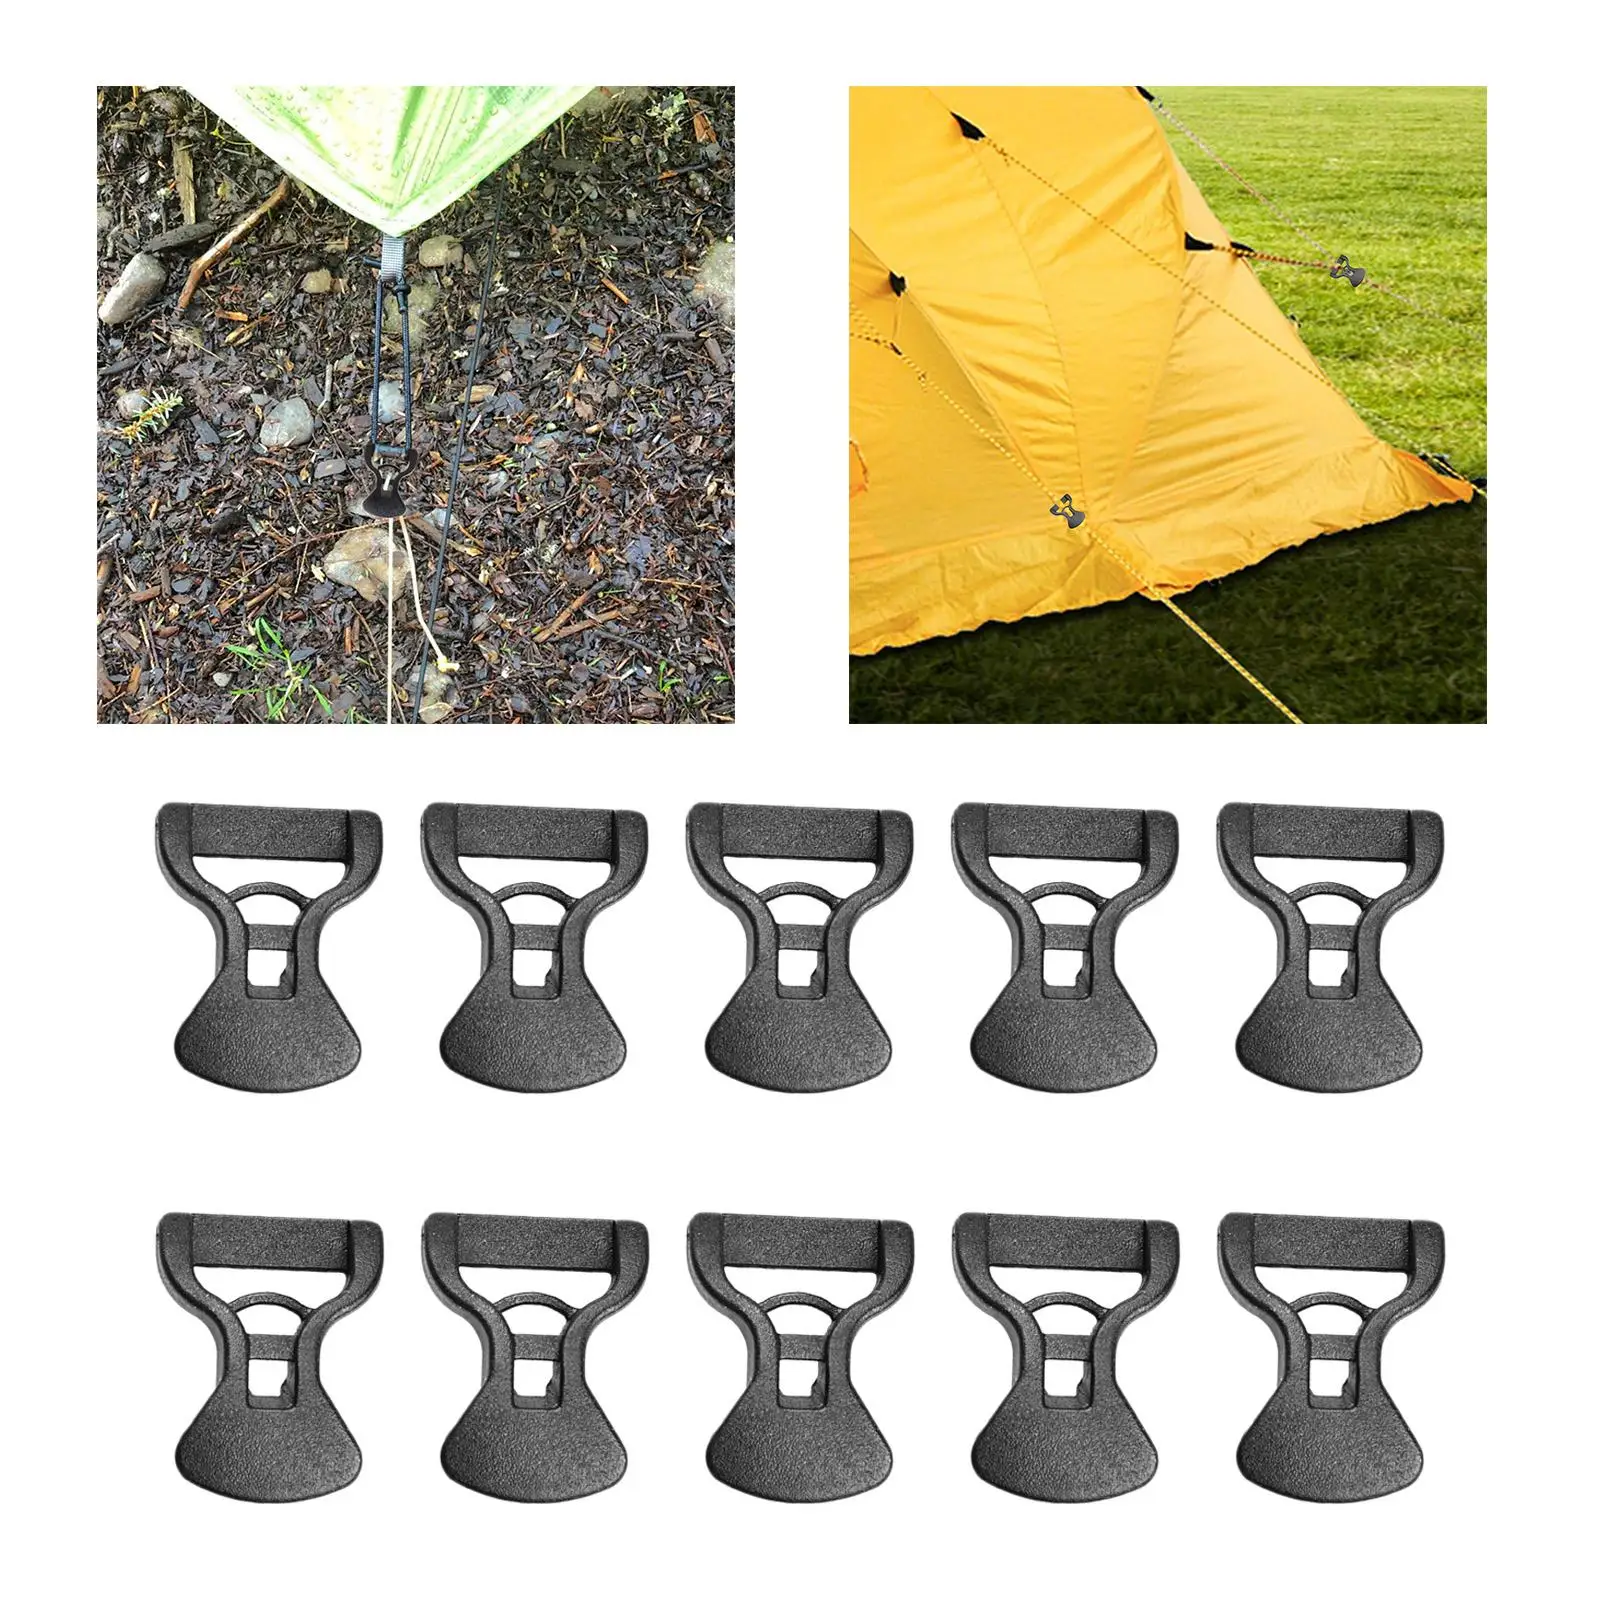 10x Fixing Clip Tent Tarp Adjustment Buckle Outdoor Anti-Slip Camping Anwing